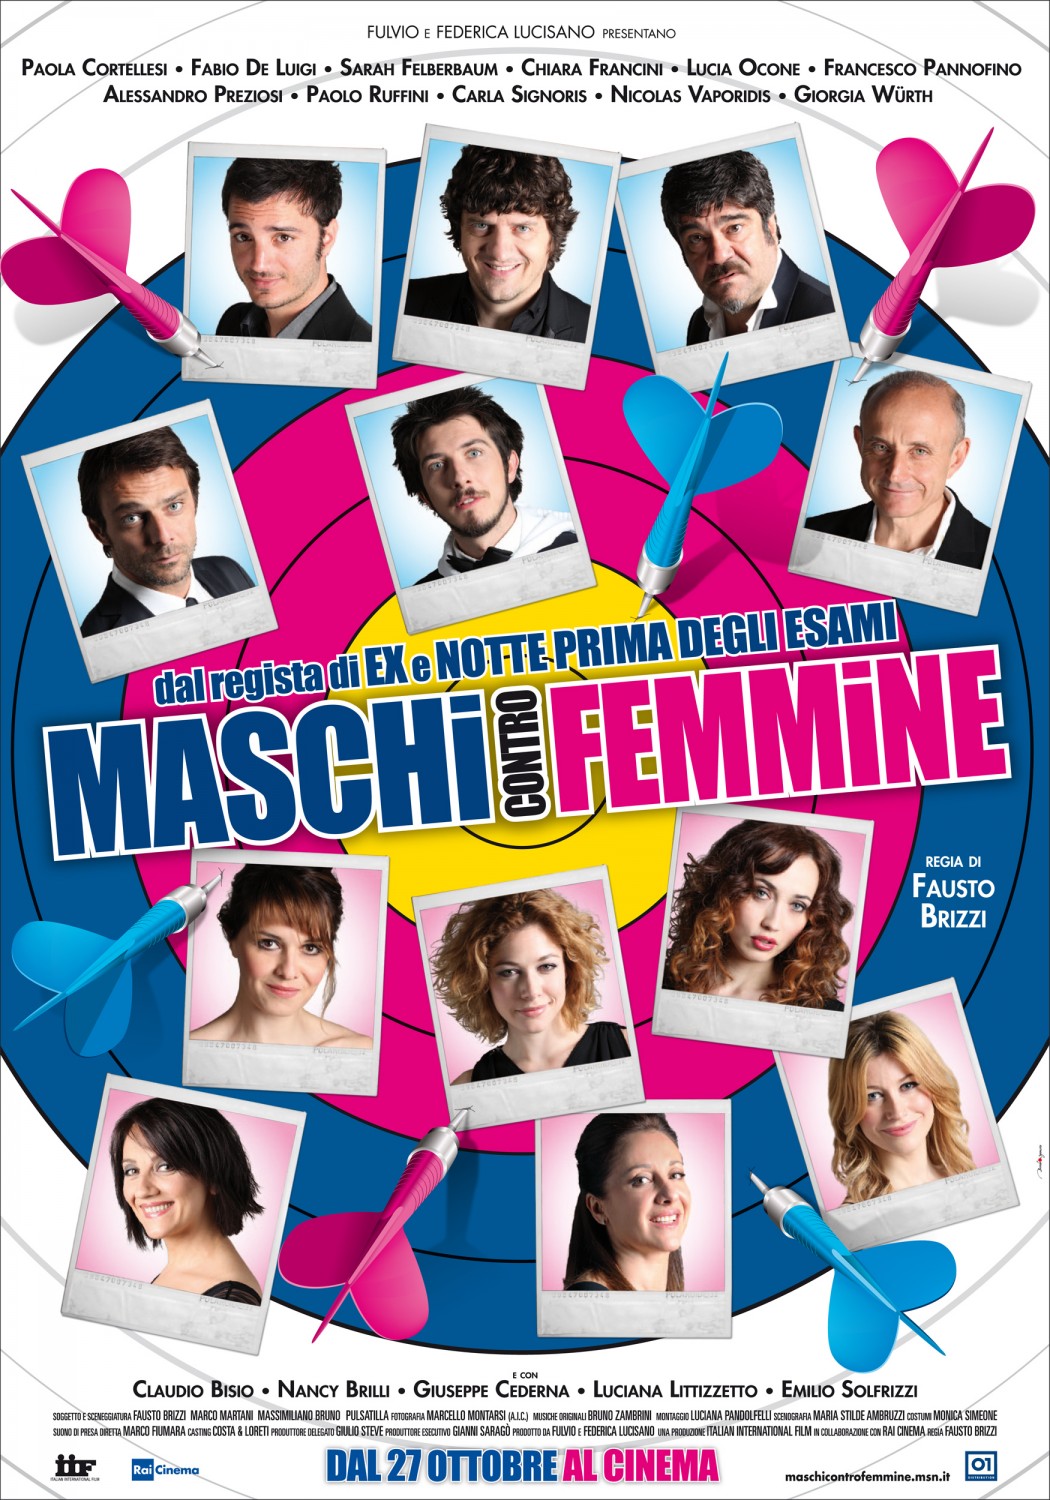 Extra Large Movie Poster Image for Maschi contro femmine 